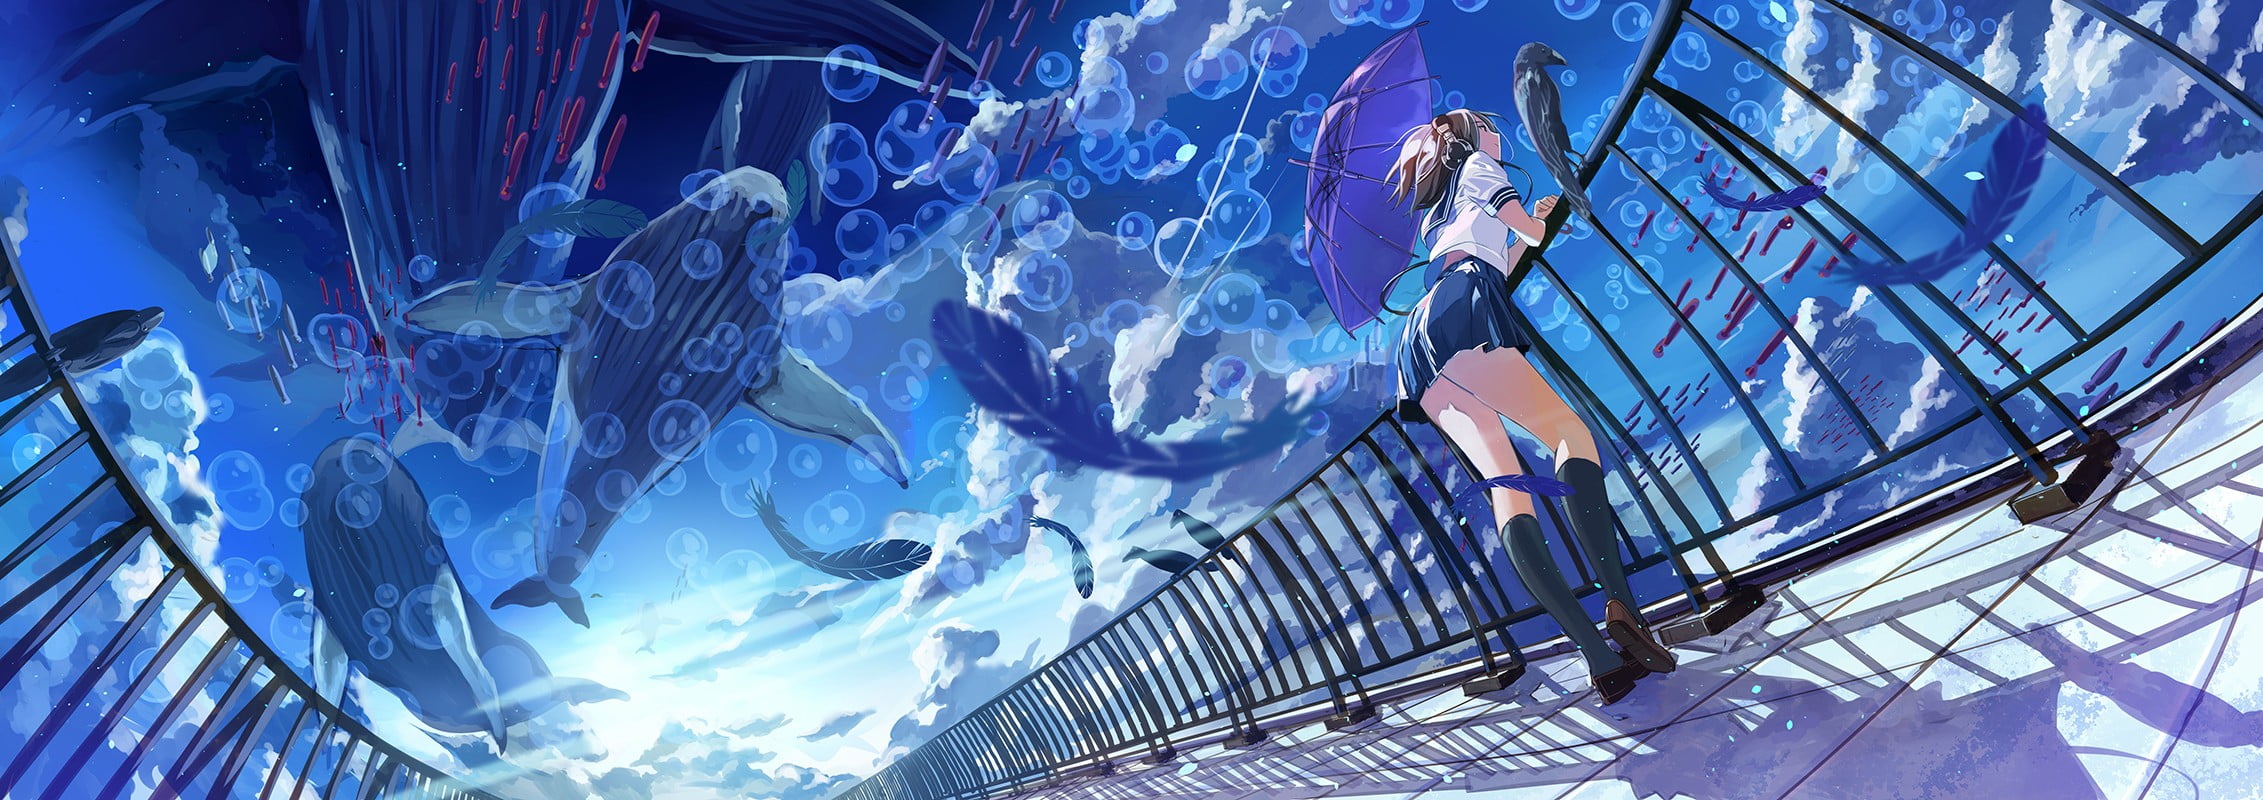 umbrella, fish, school uniform, anime girls, clouds, whale